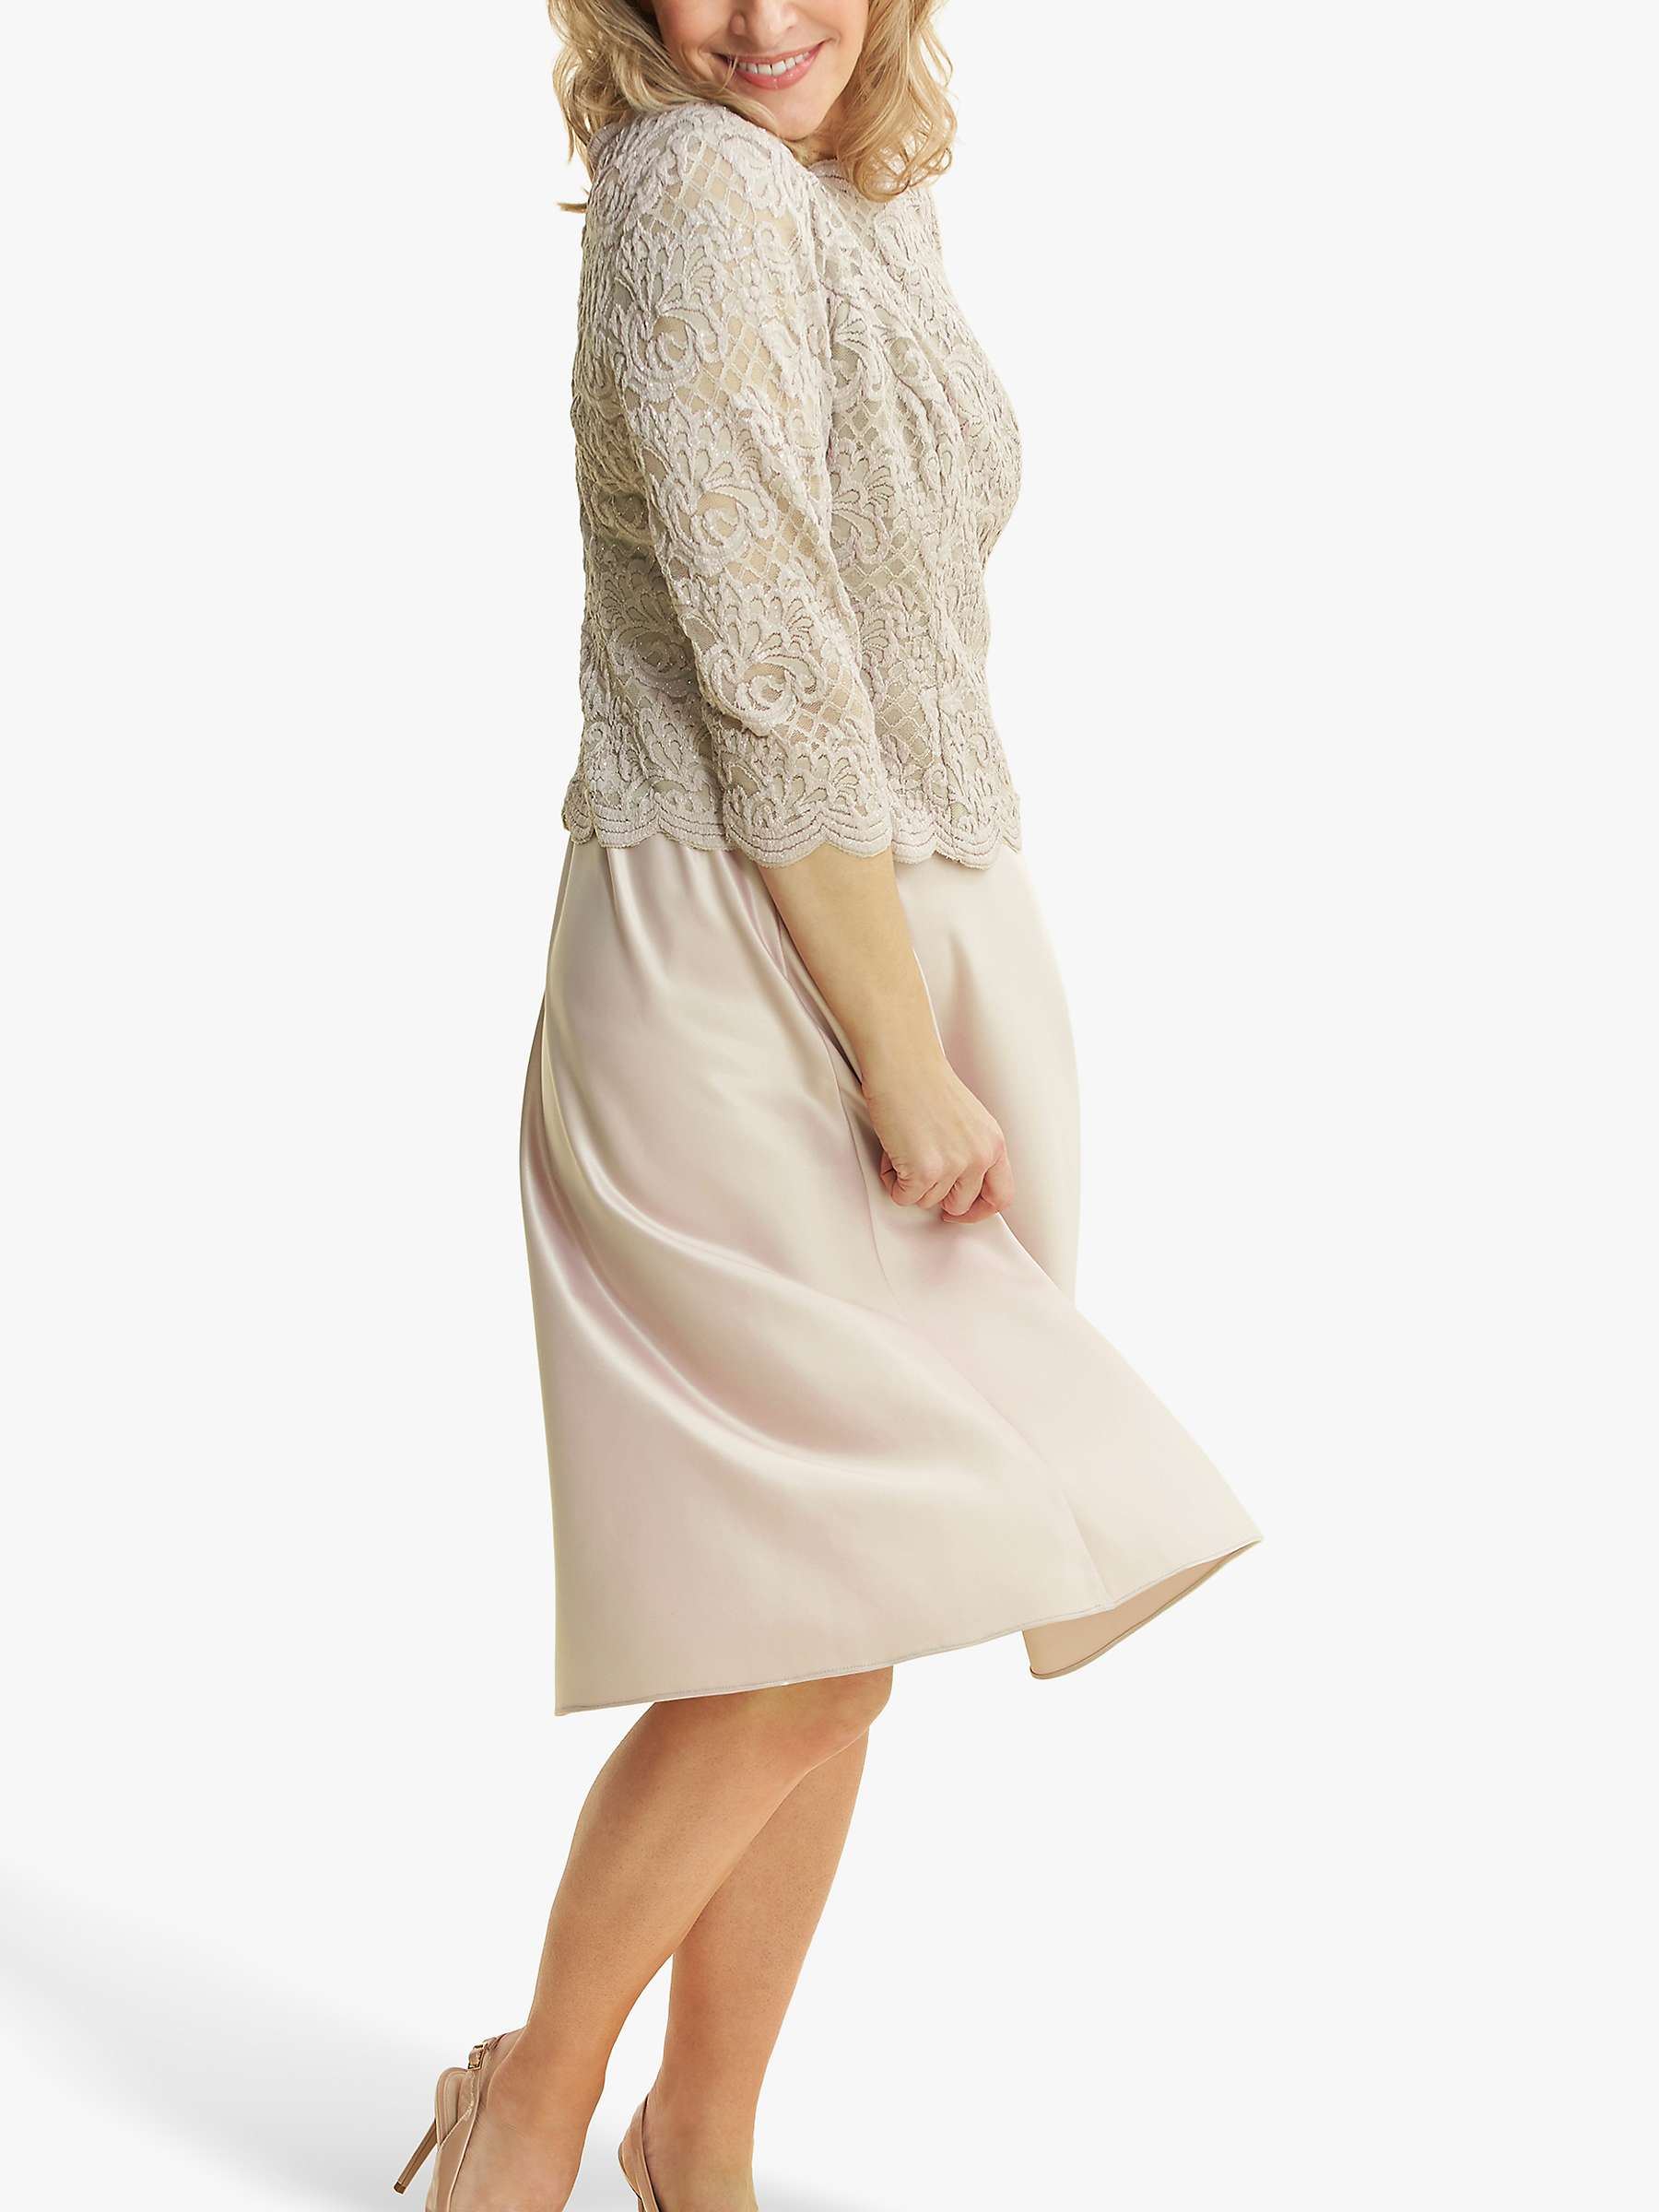 Buy Gina Bacconi Sara Lace Satin Dress, Taupe Online at johnlewis.com